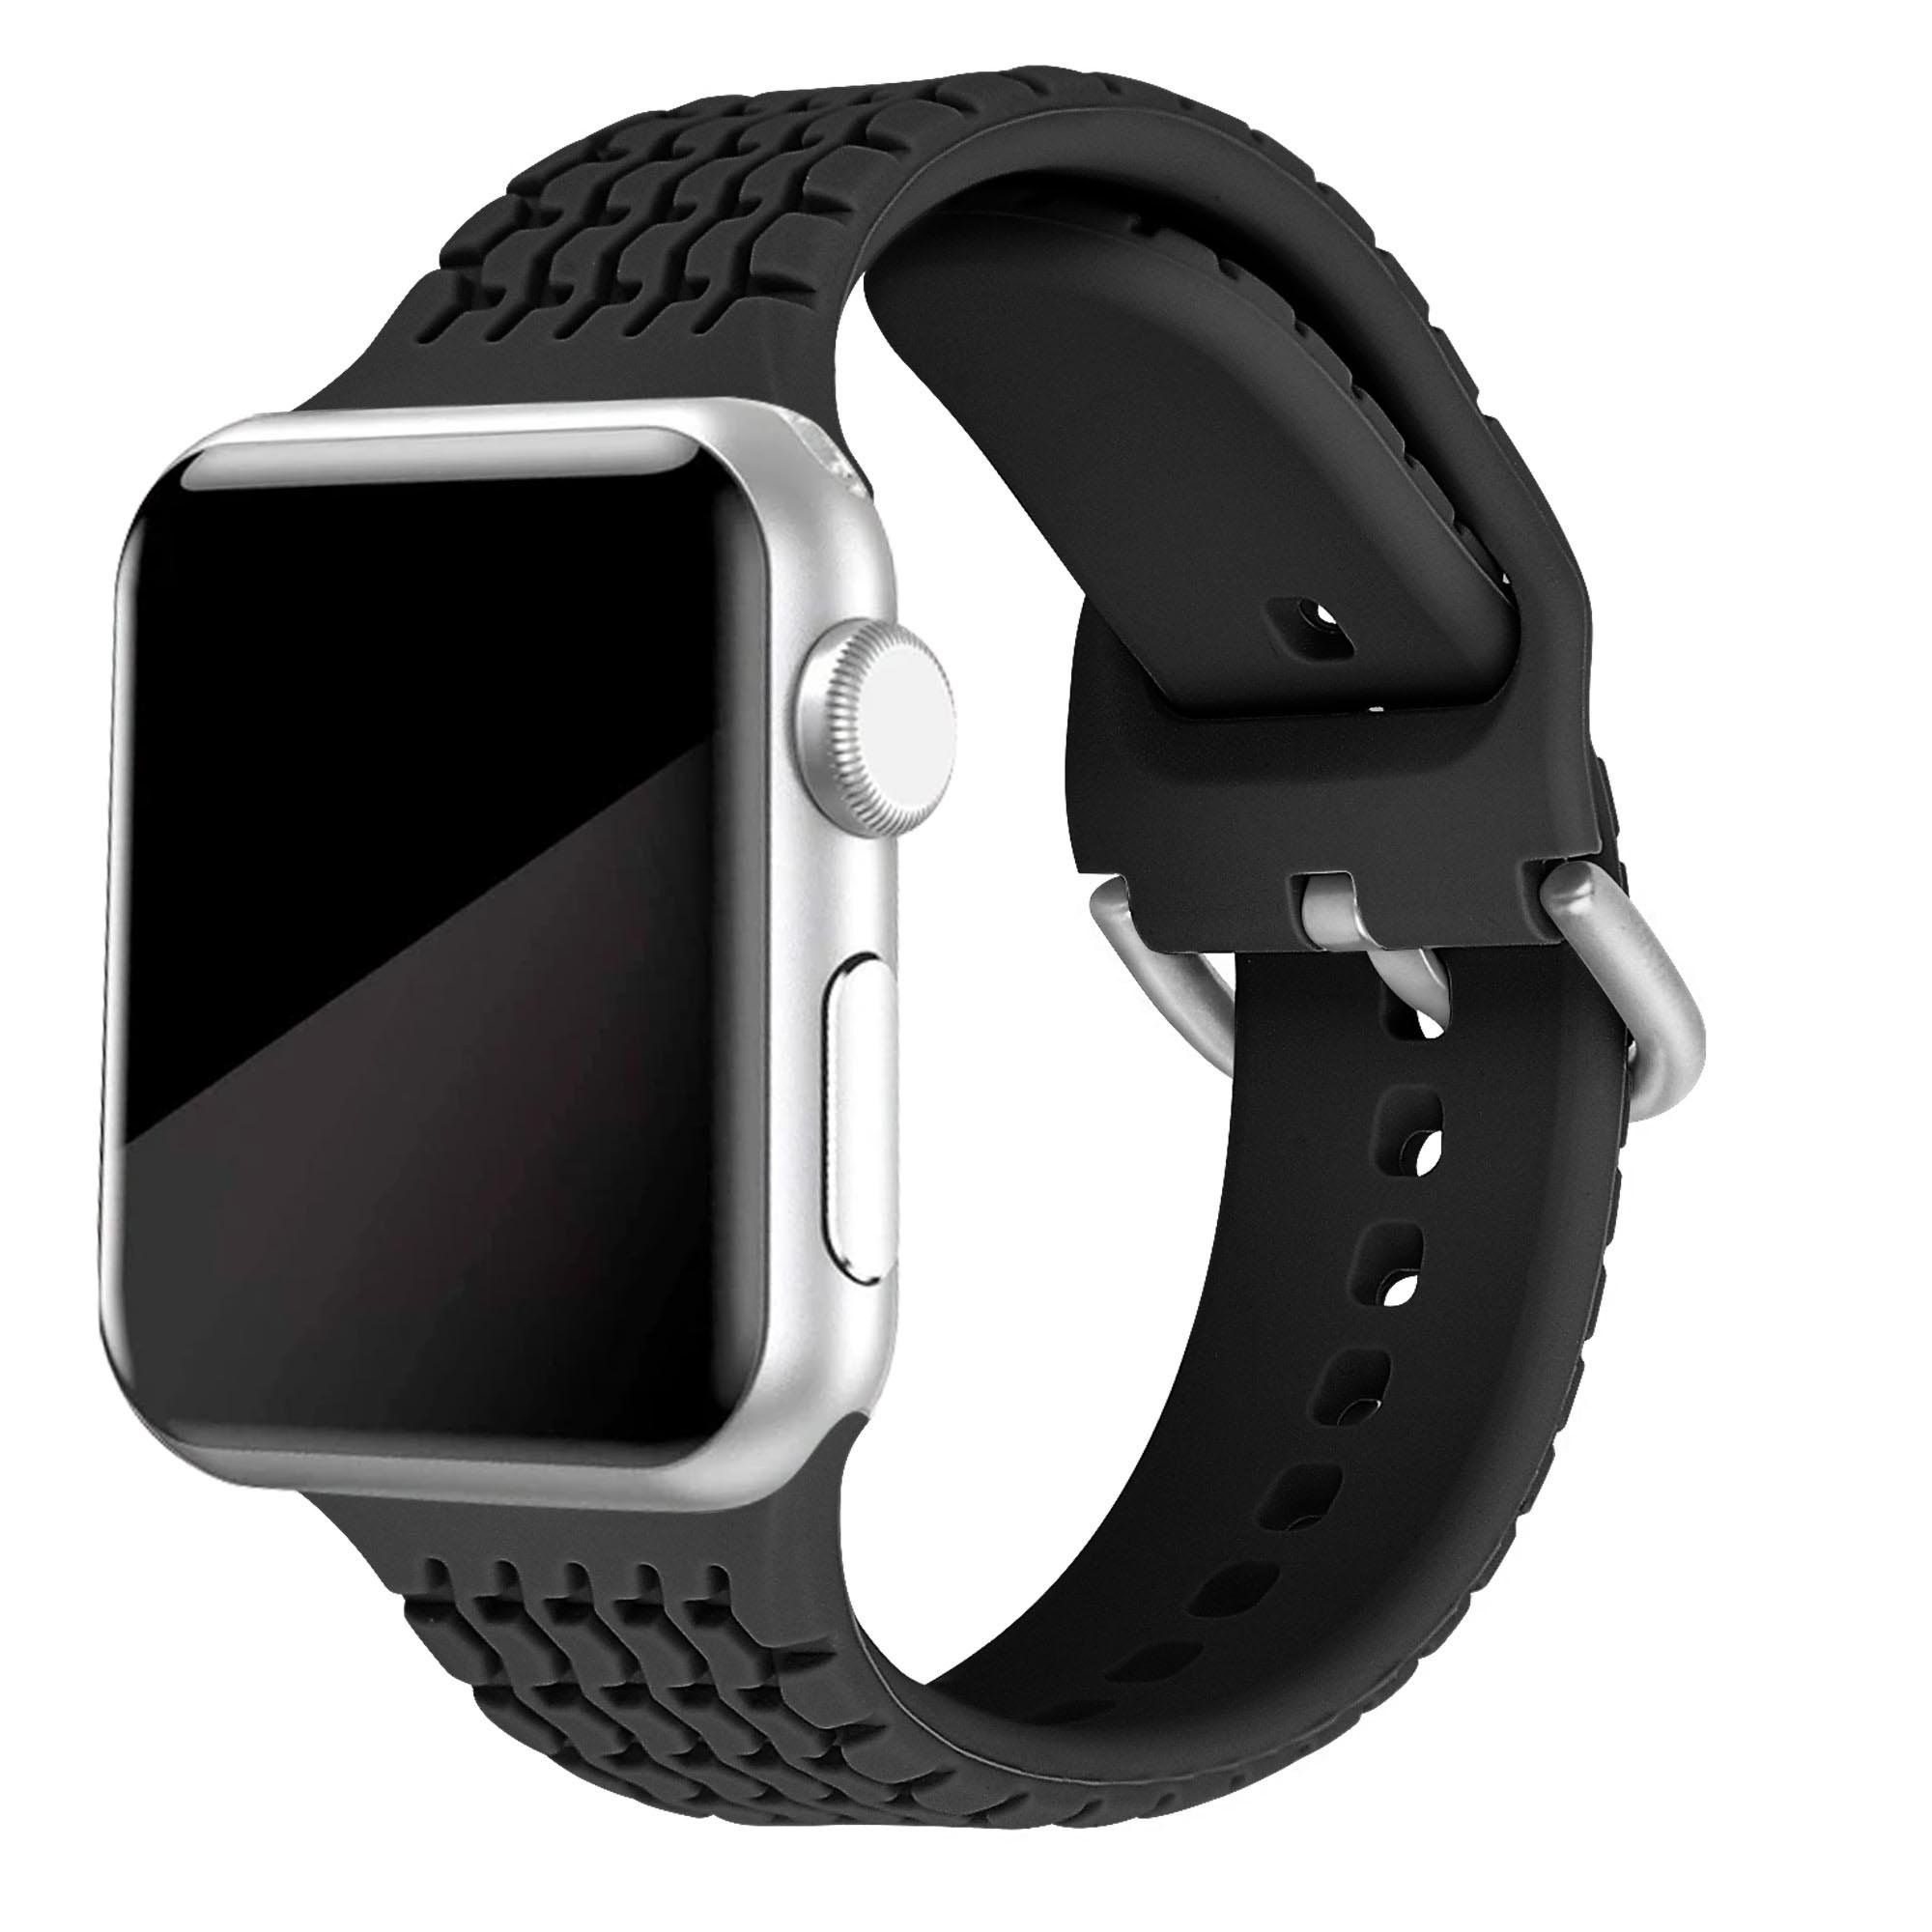 Federal Staircase Overtake Apple Watch Series 5 للبيع الآن spot too much  Brutal